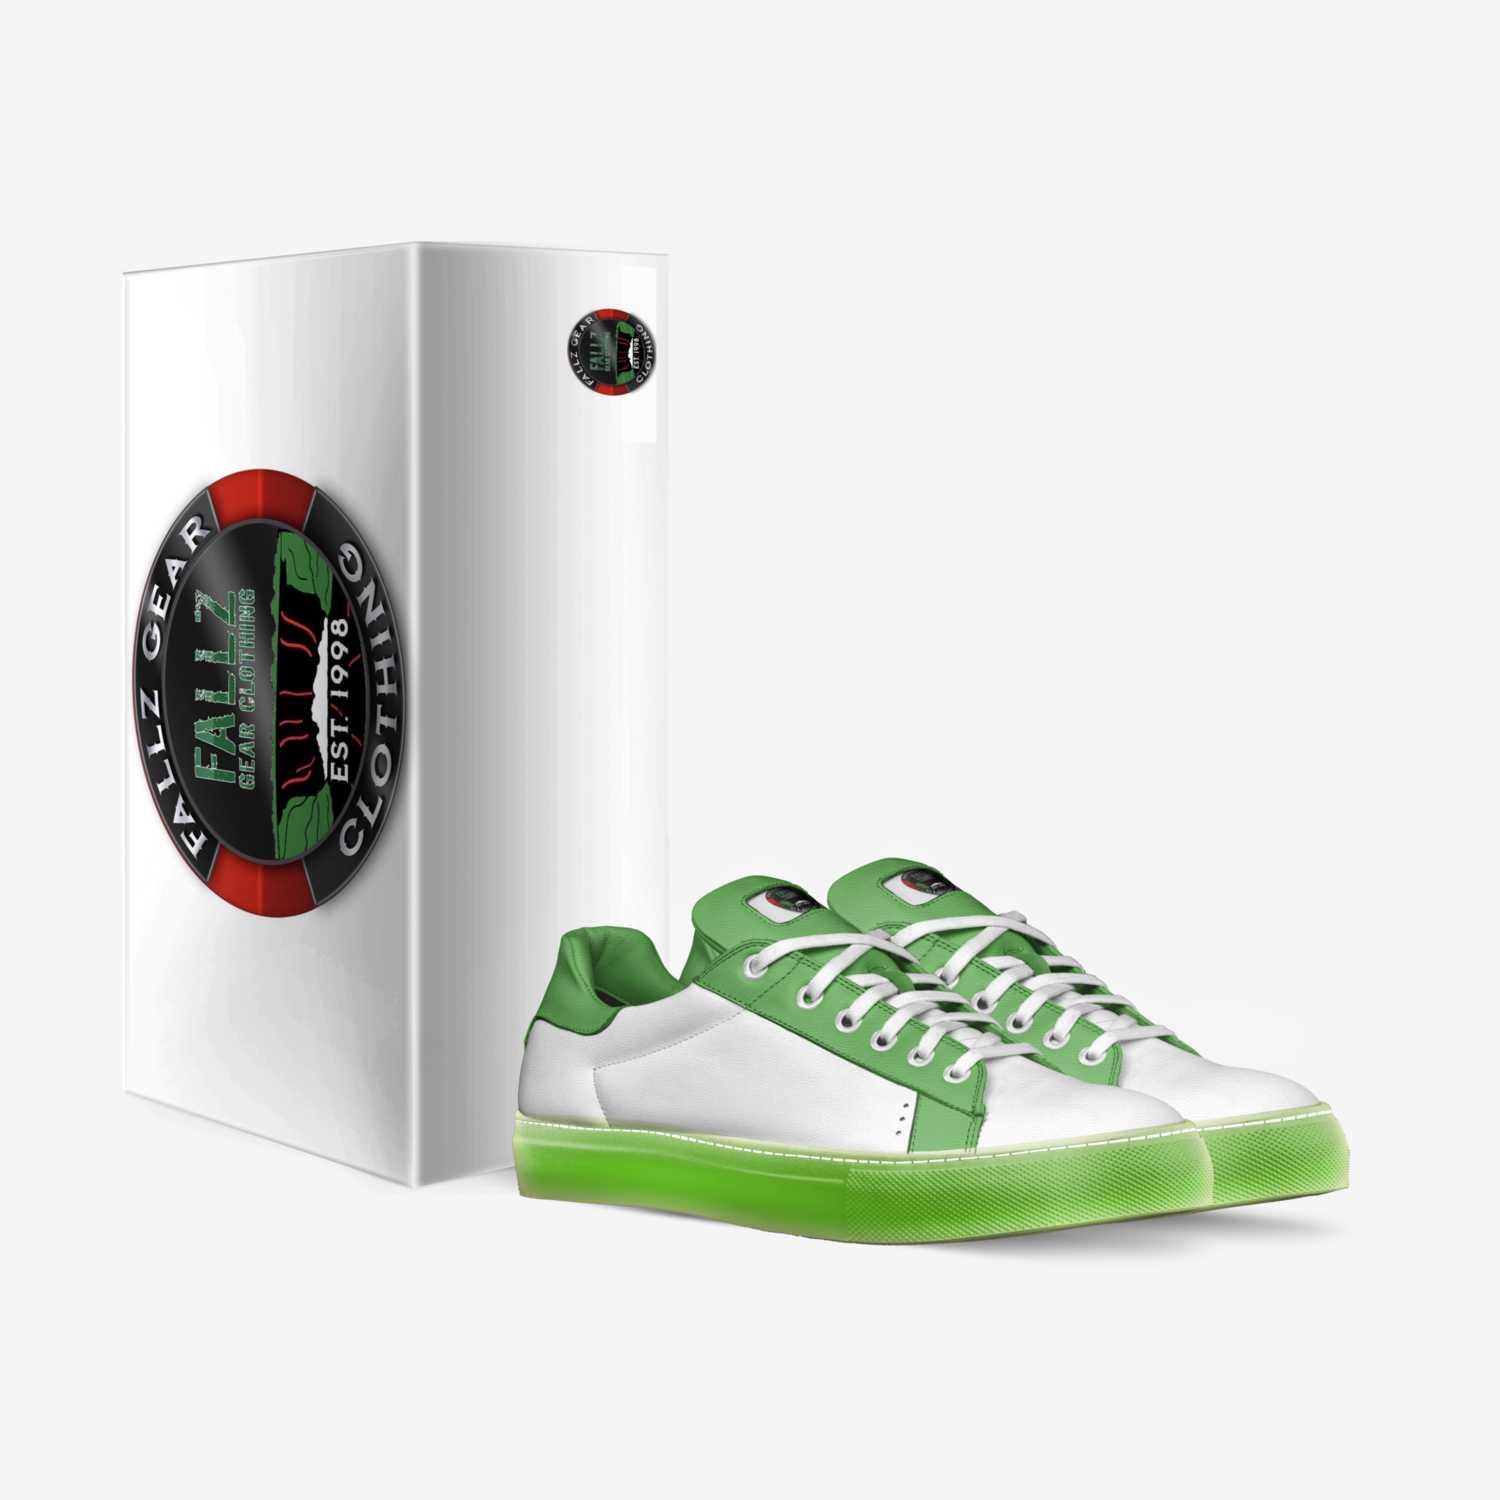 Fallz Gear: Booger custom made in Italy shoes by Fallz Gear | Box view